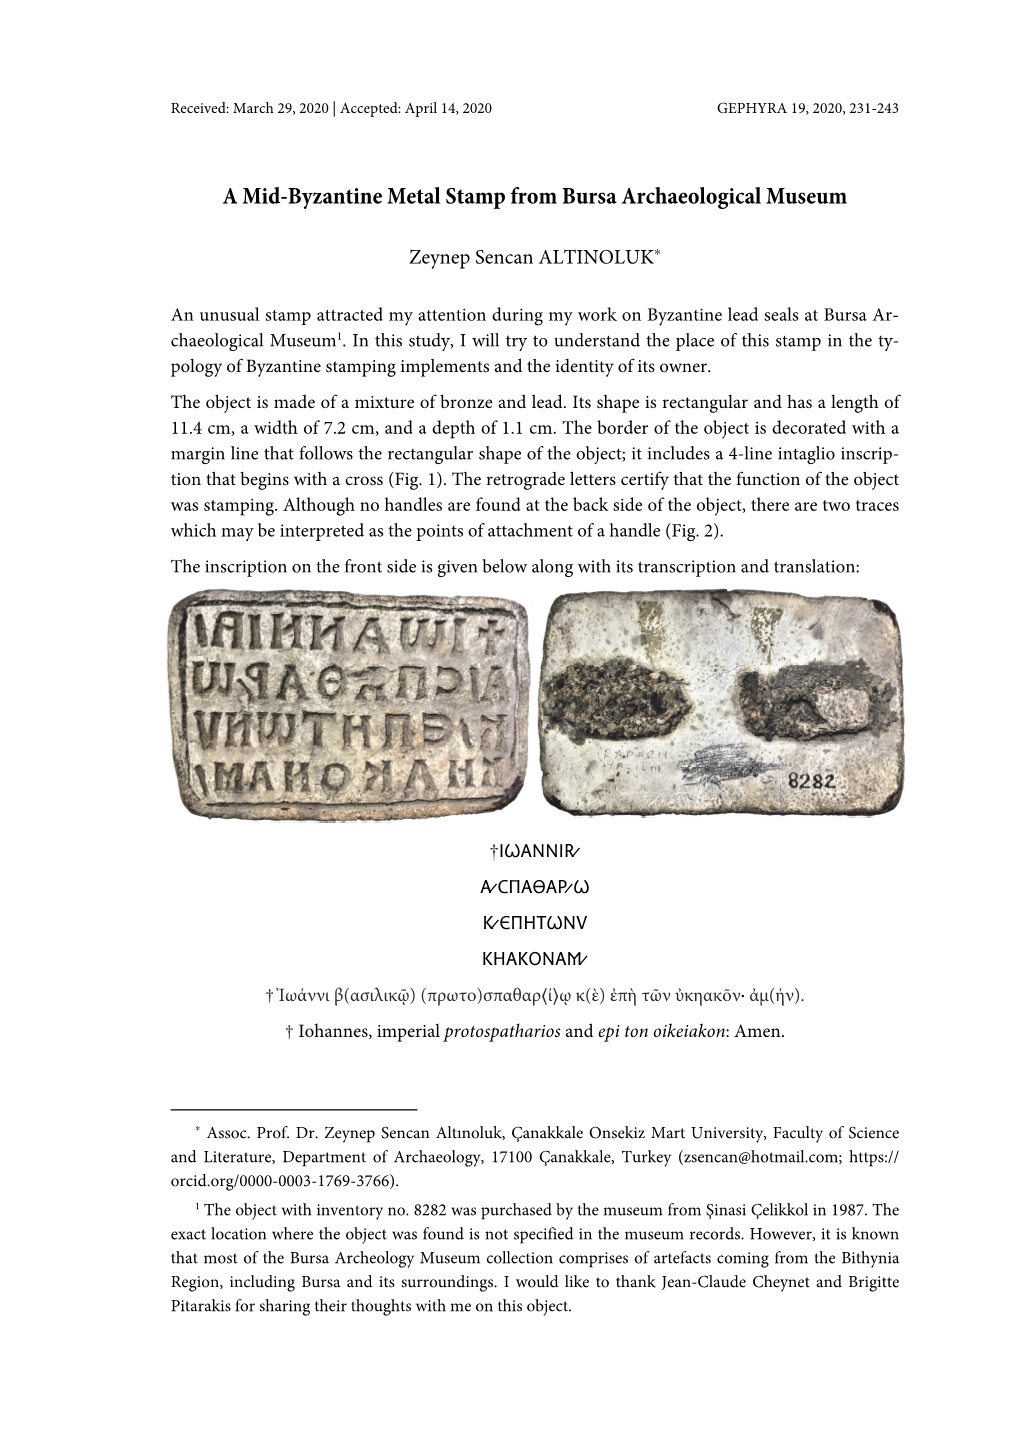 11) Altınoluk, a Mid-Byzantine Metal Stamp 231-243